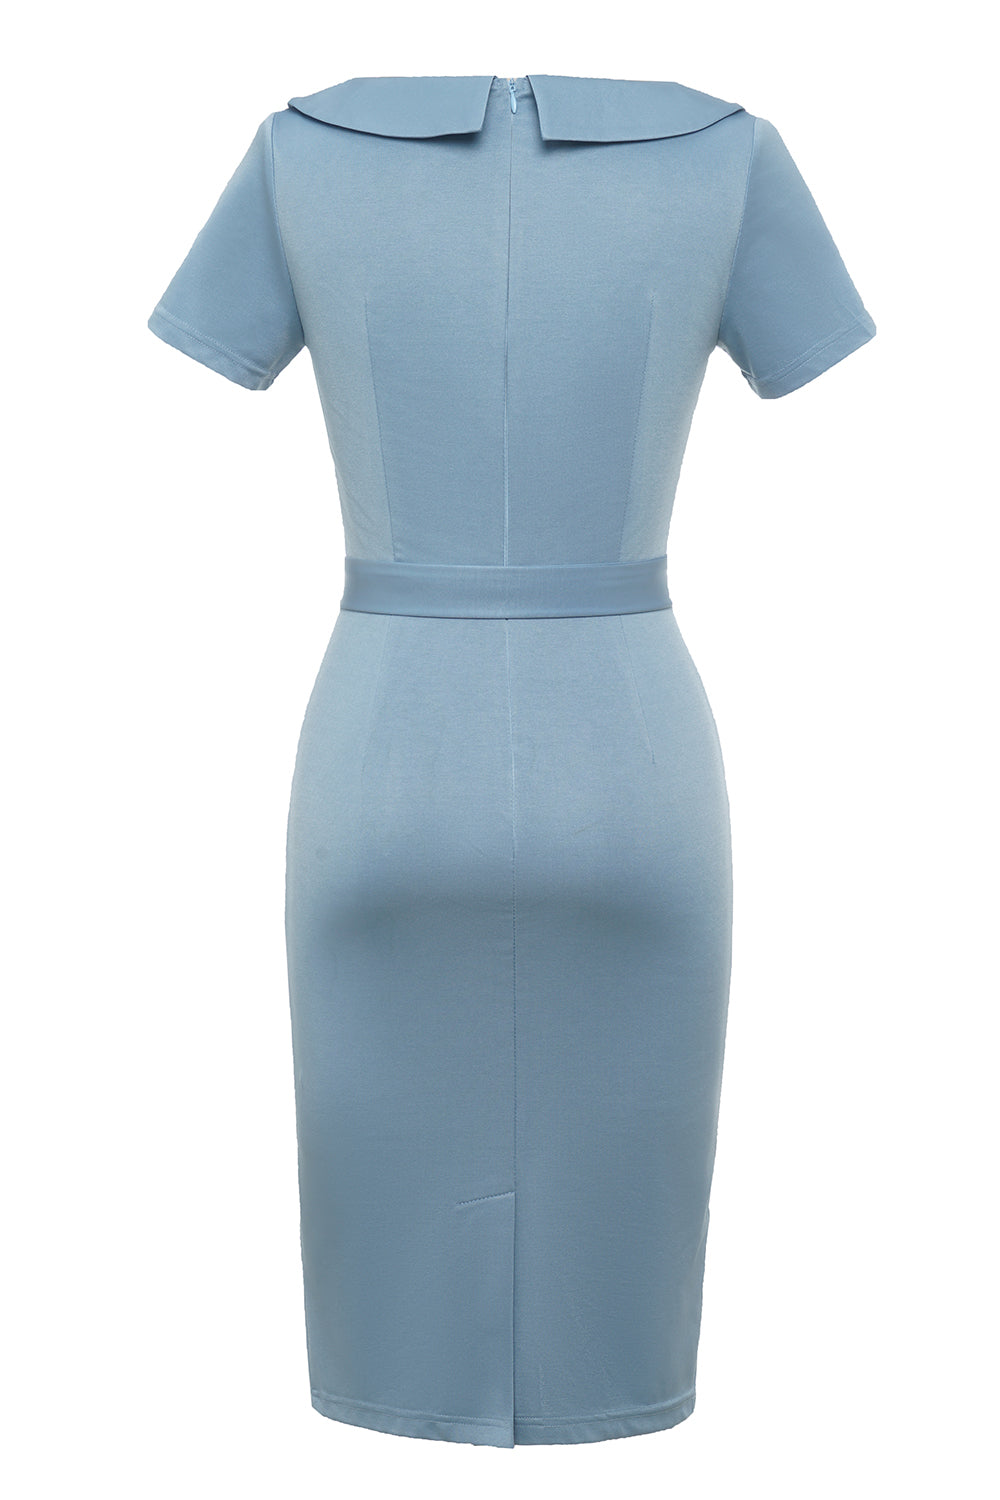 Bodycon Round Neck Light Blue 1960s Dress